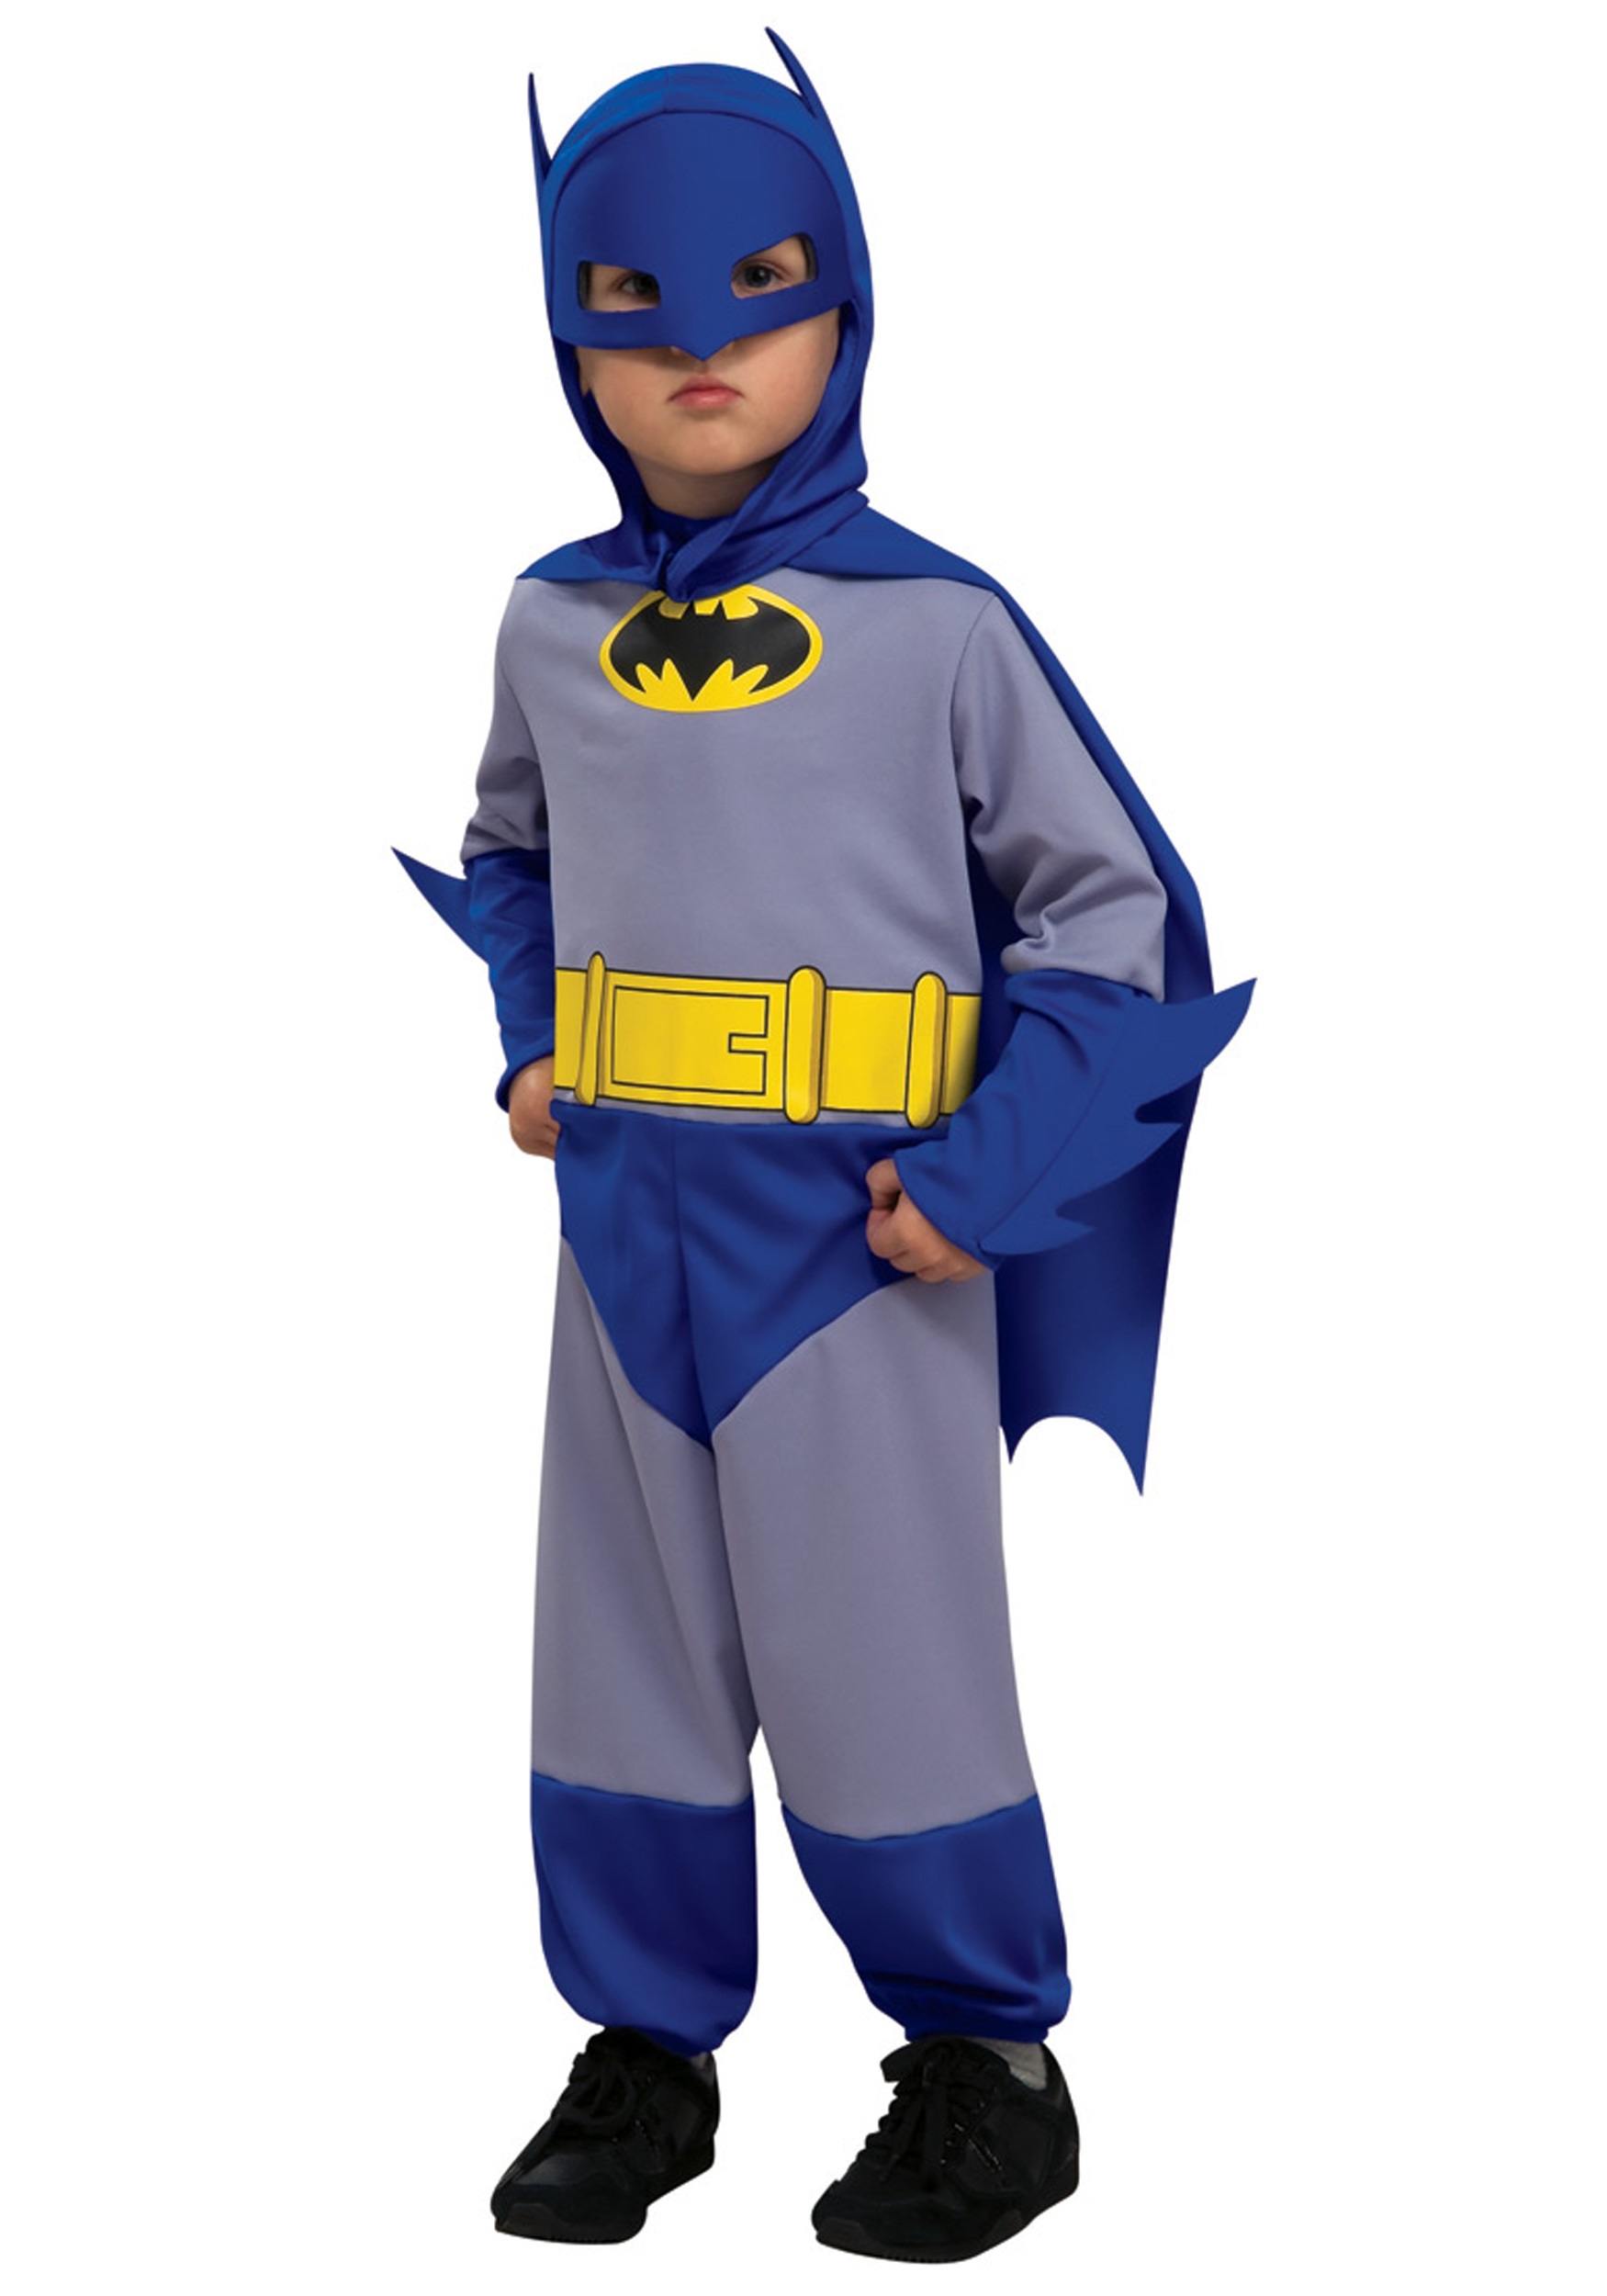 st $ 12 99 batman dark knight belt add size st $ 34 99 deluxe batman ...